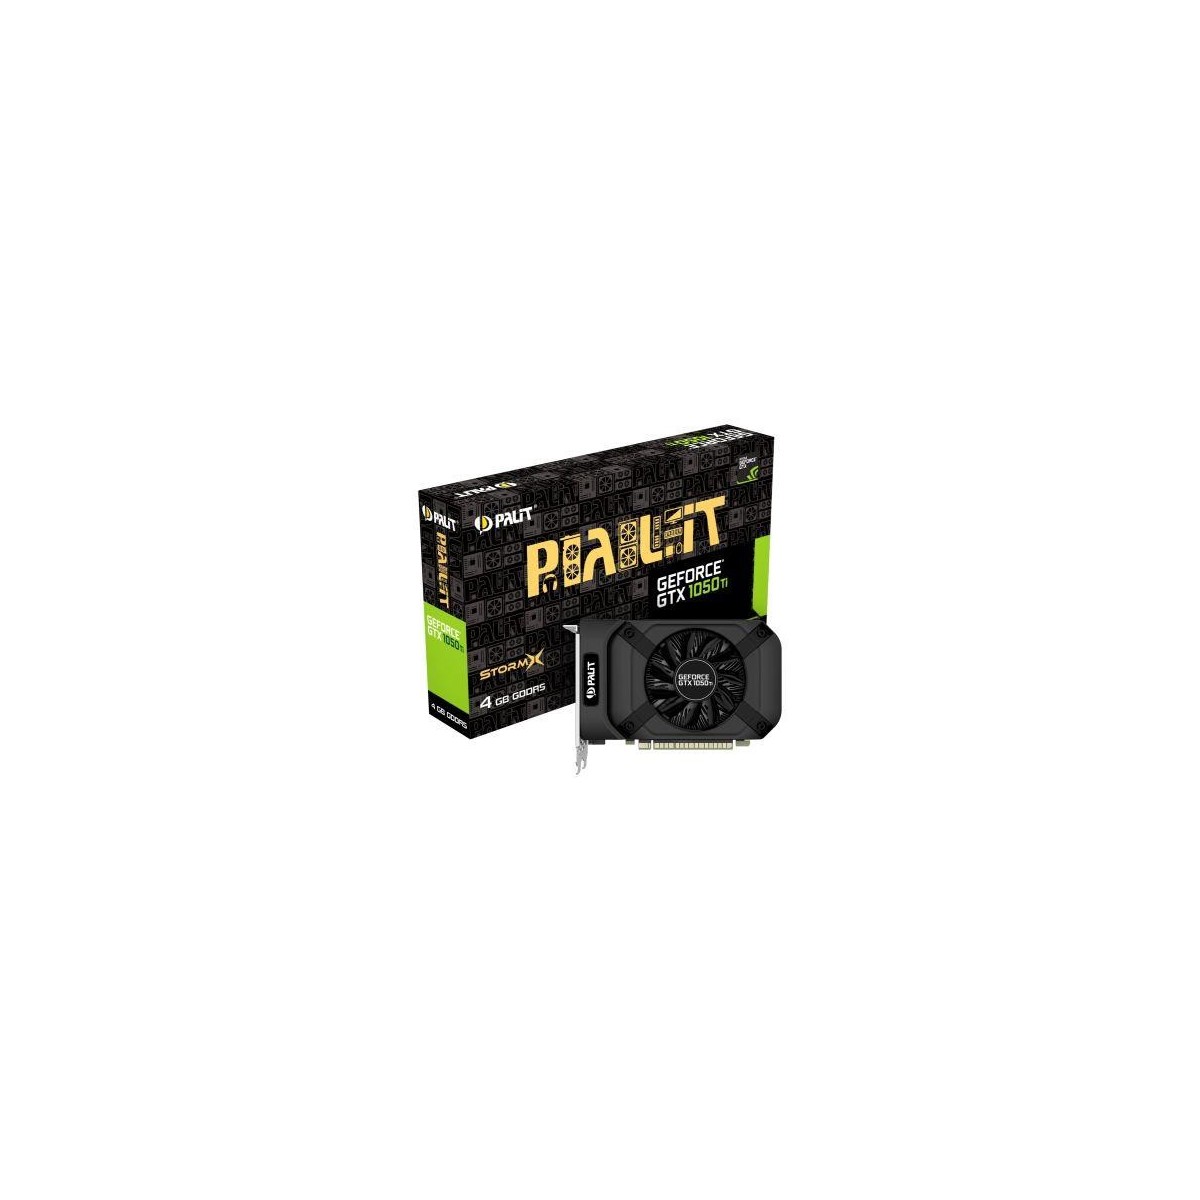 Palit GeForce GTX 1050 Ti StormX 4 GB - Grafikkarte - PCI-Express